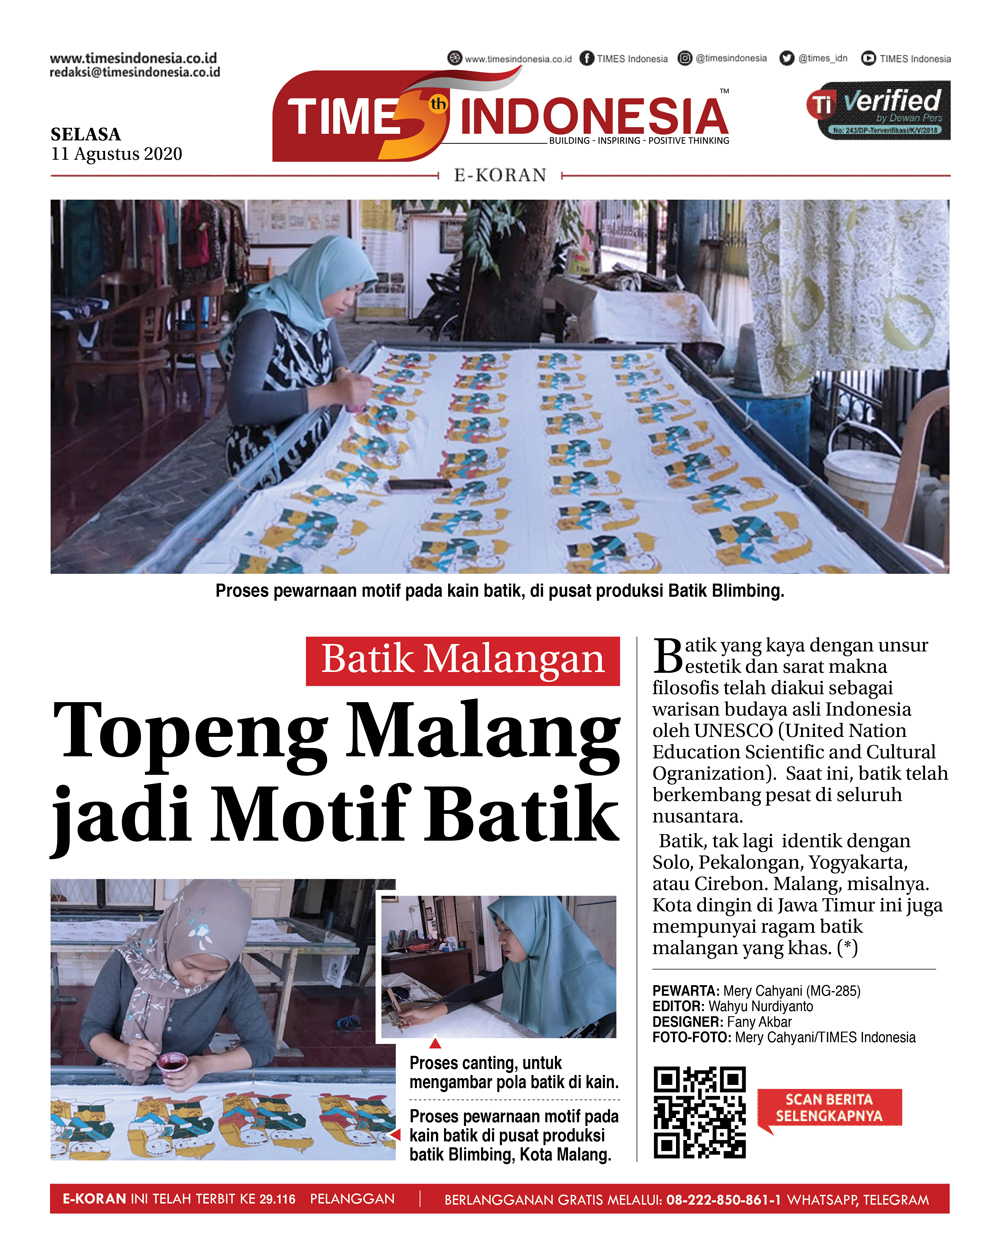 Edisi-Selasa-11-Agustus-2020-Batik-Malangan.jpg